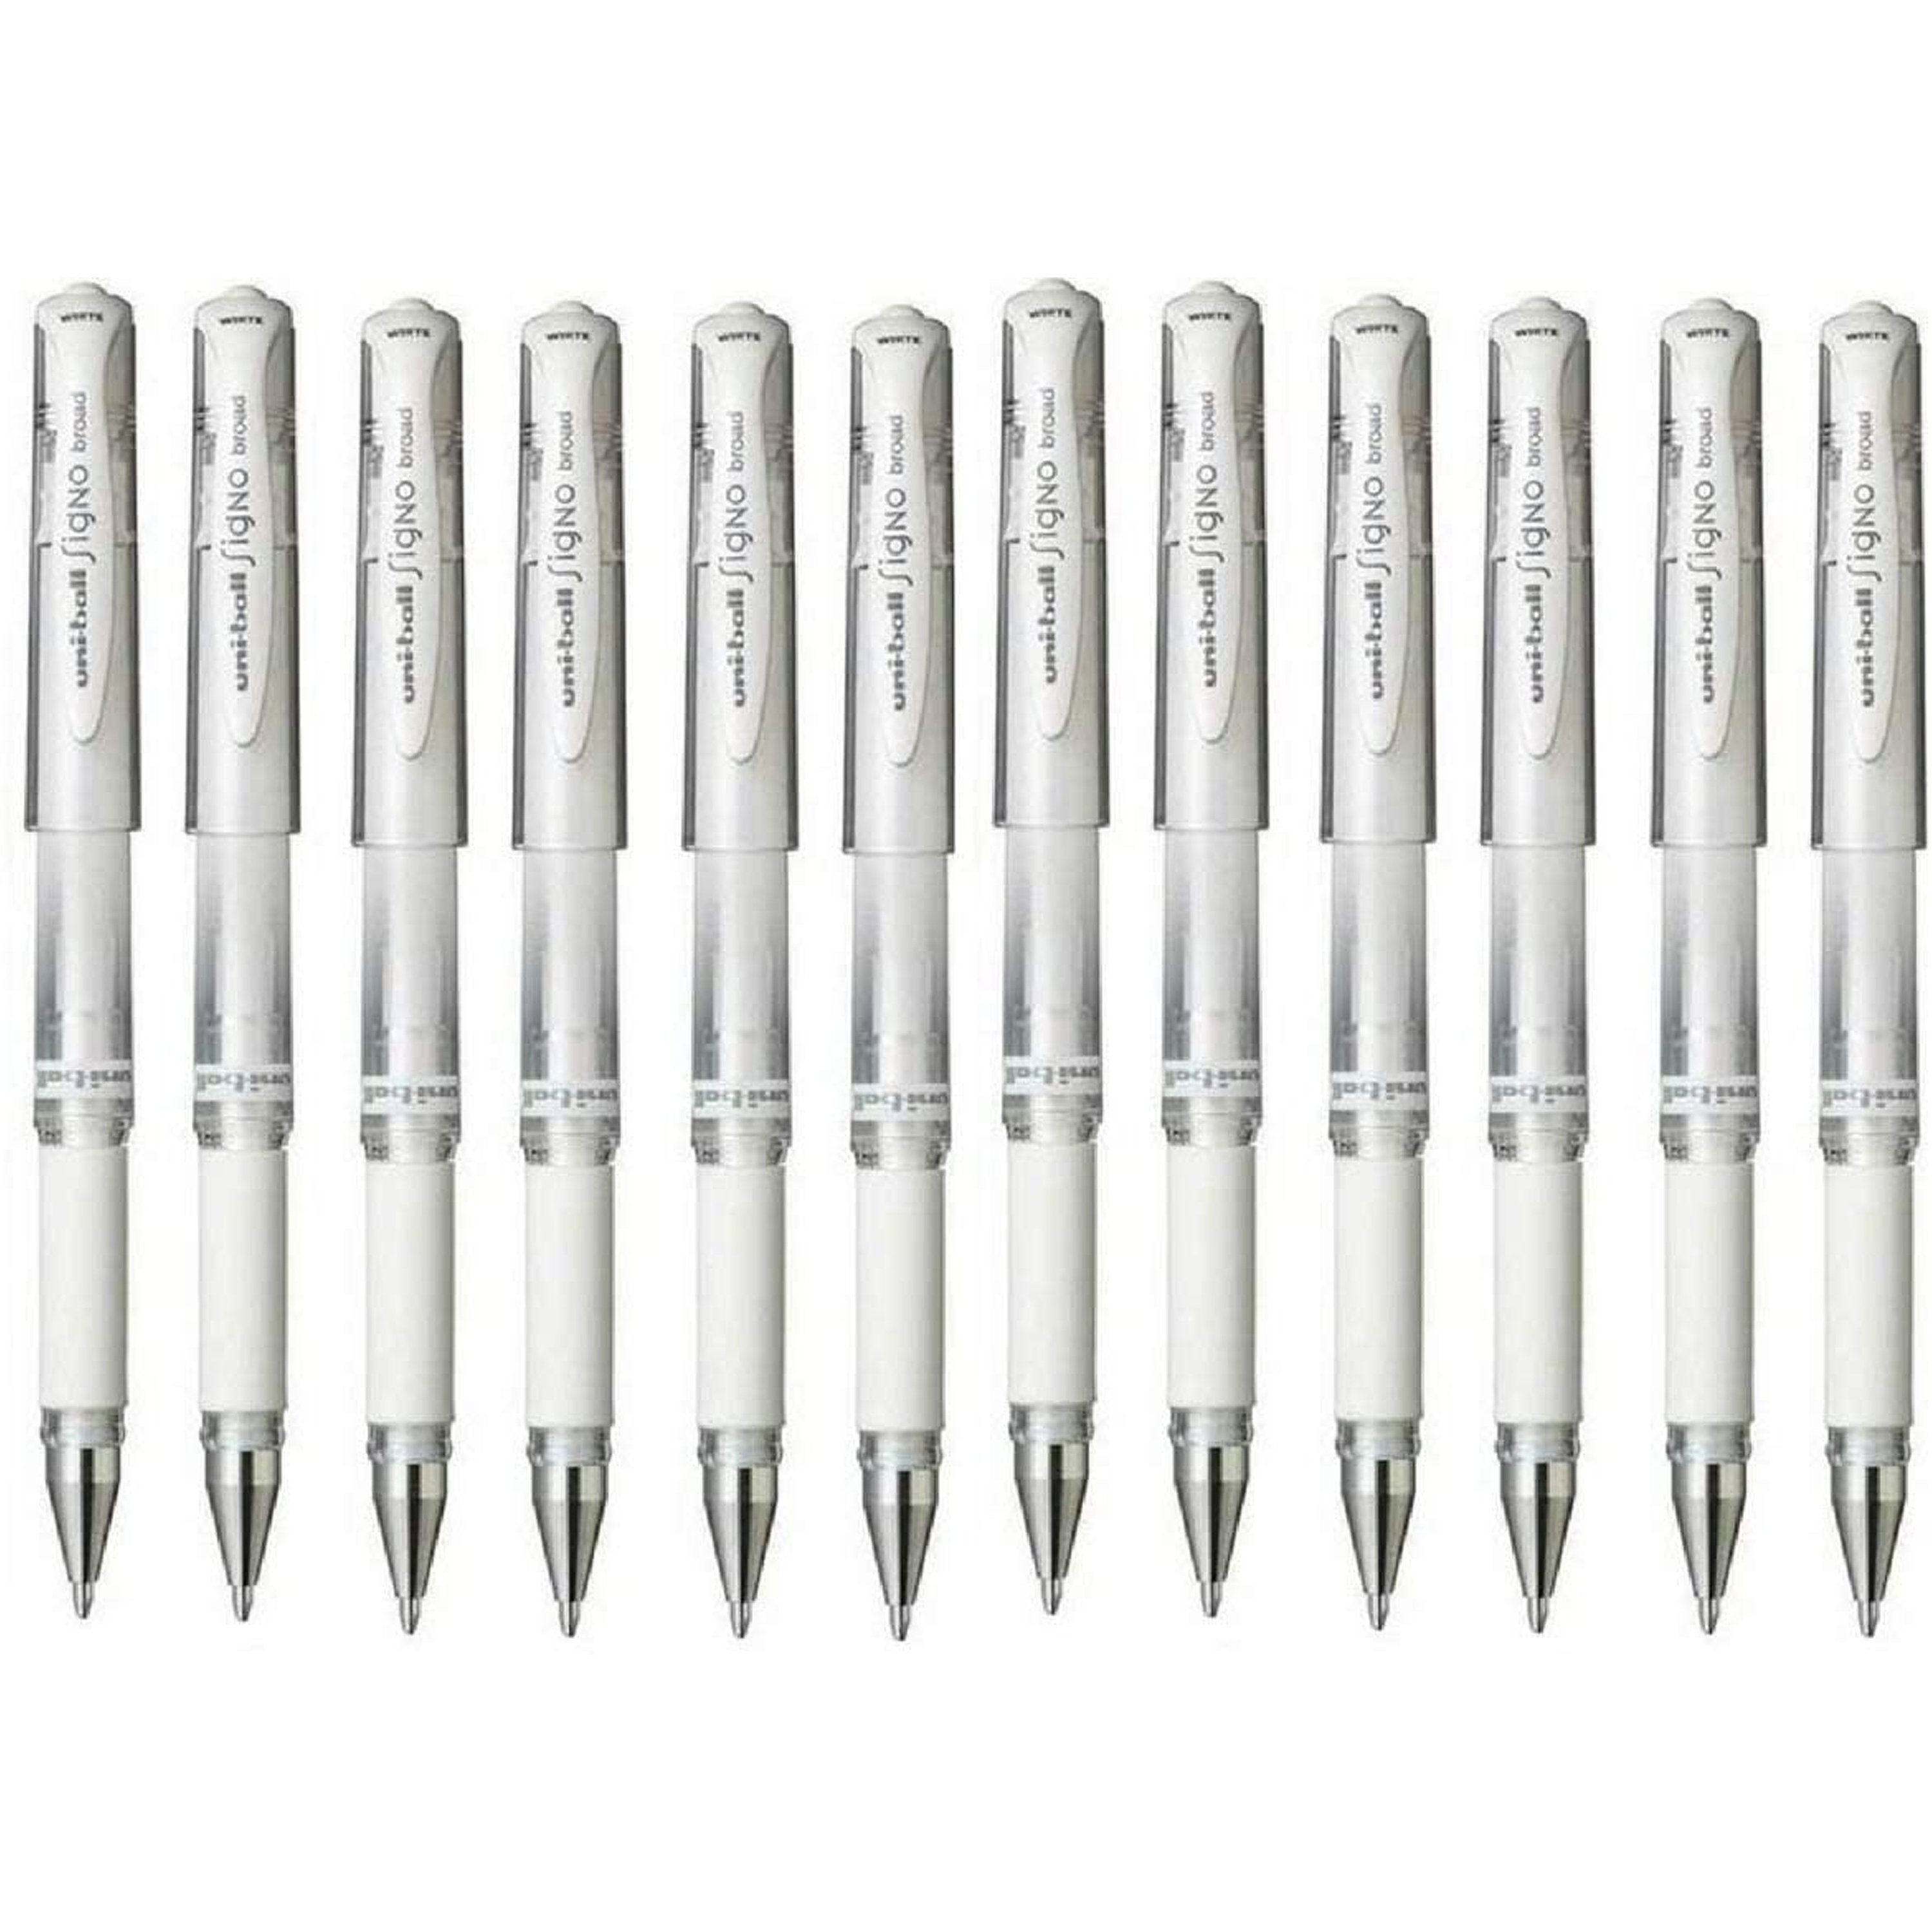 Uni Coloured Broad 4-8.5mm PX-30 Silver Oil Paint Marker Pen Metal